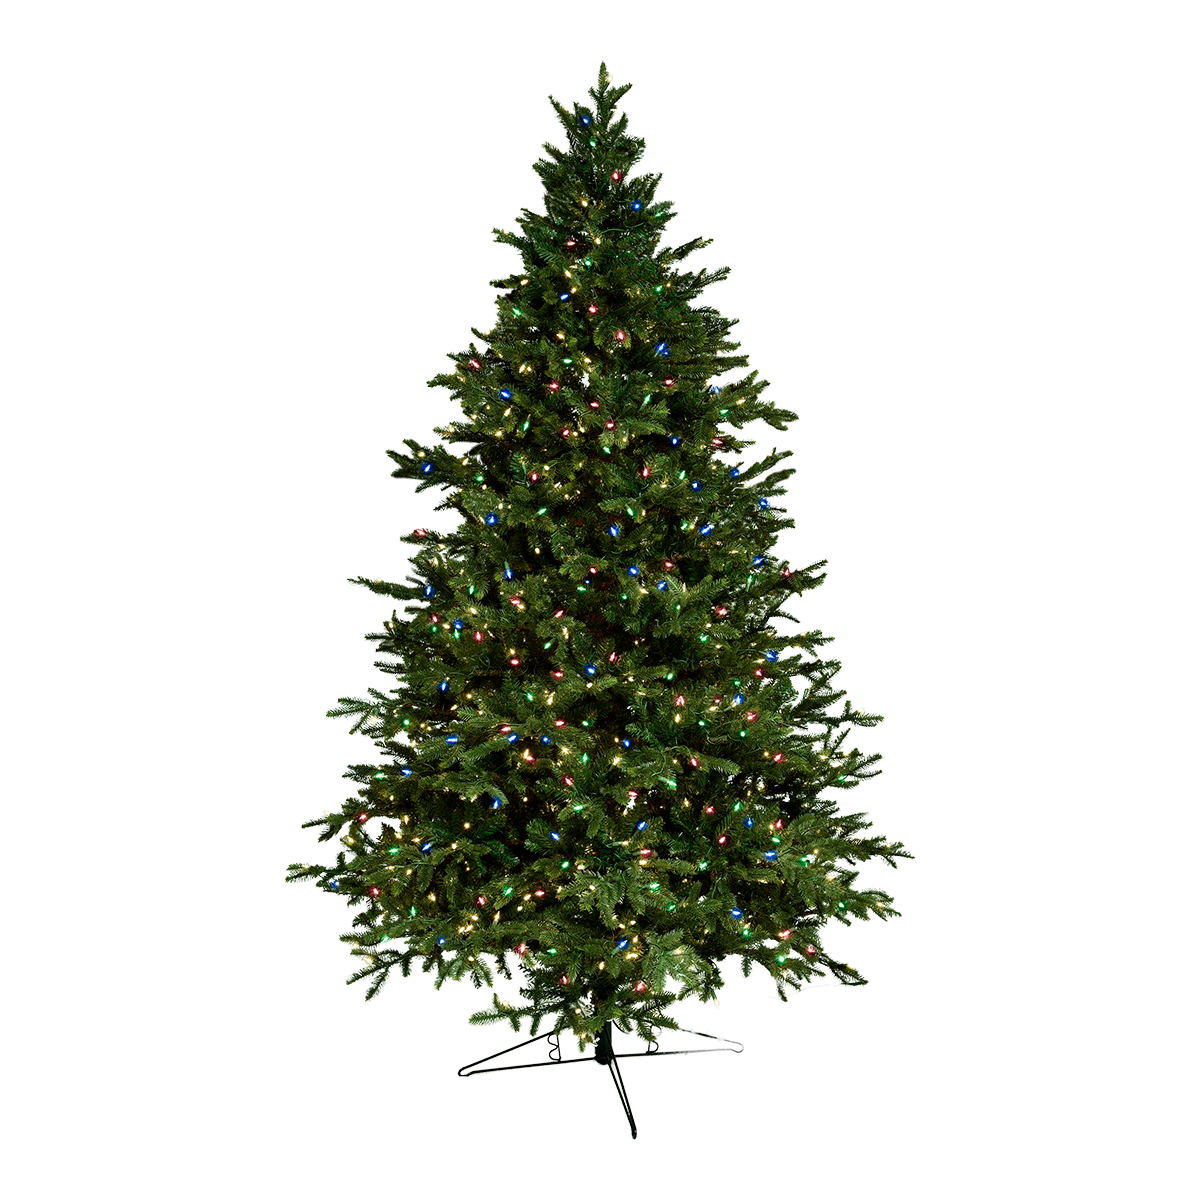 Alaskan Deluxe Christmas Tree - Multi-Color LED Lights - One-Plug Power Supply - 12ft Tall